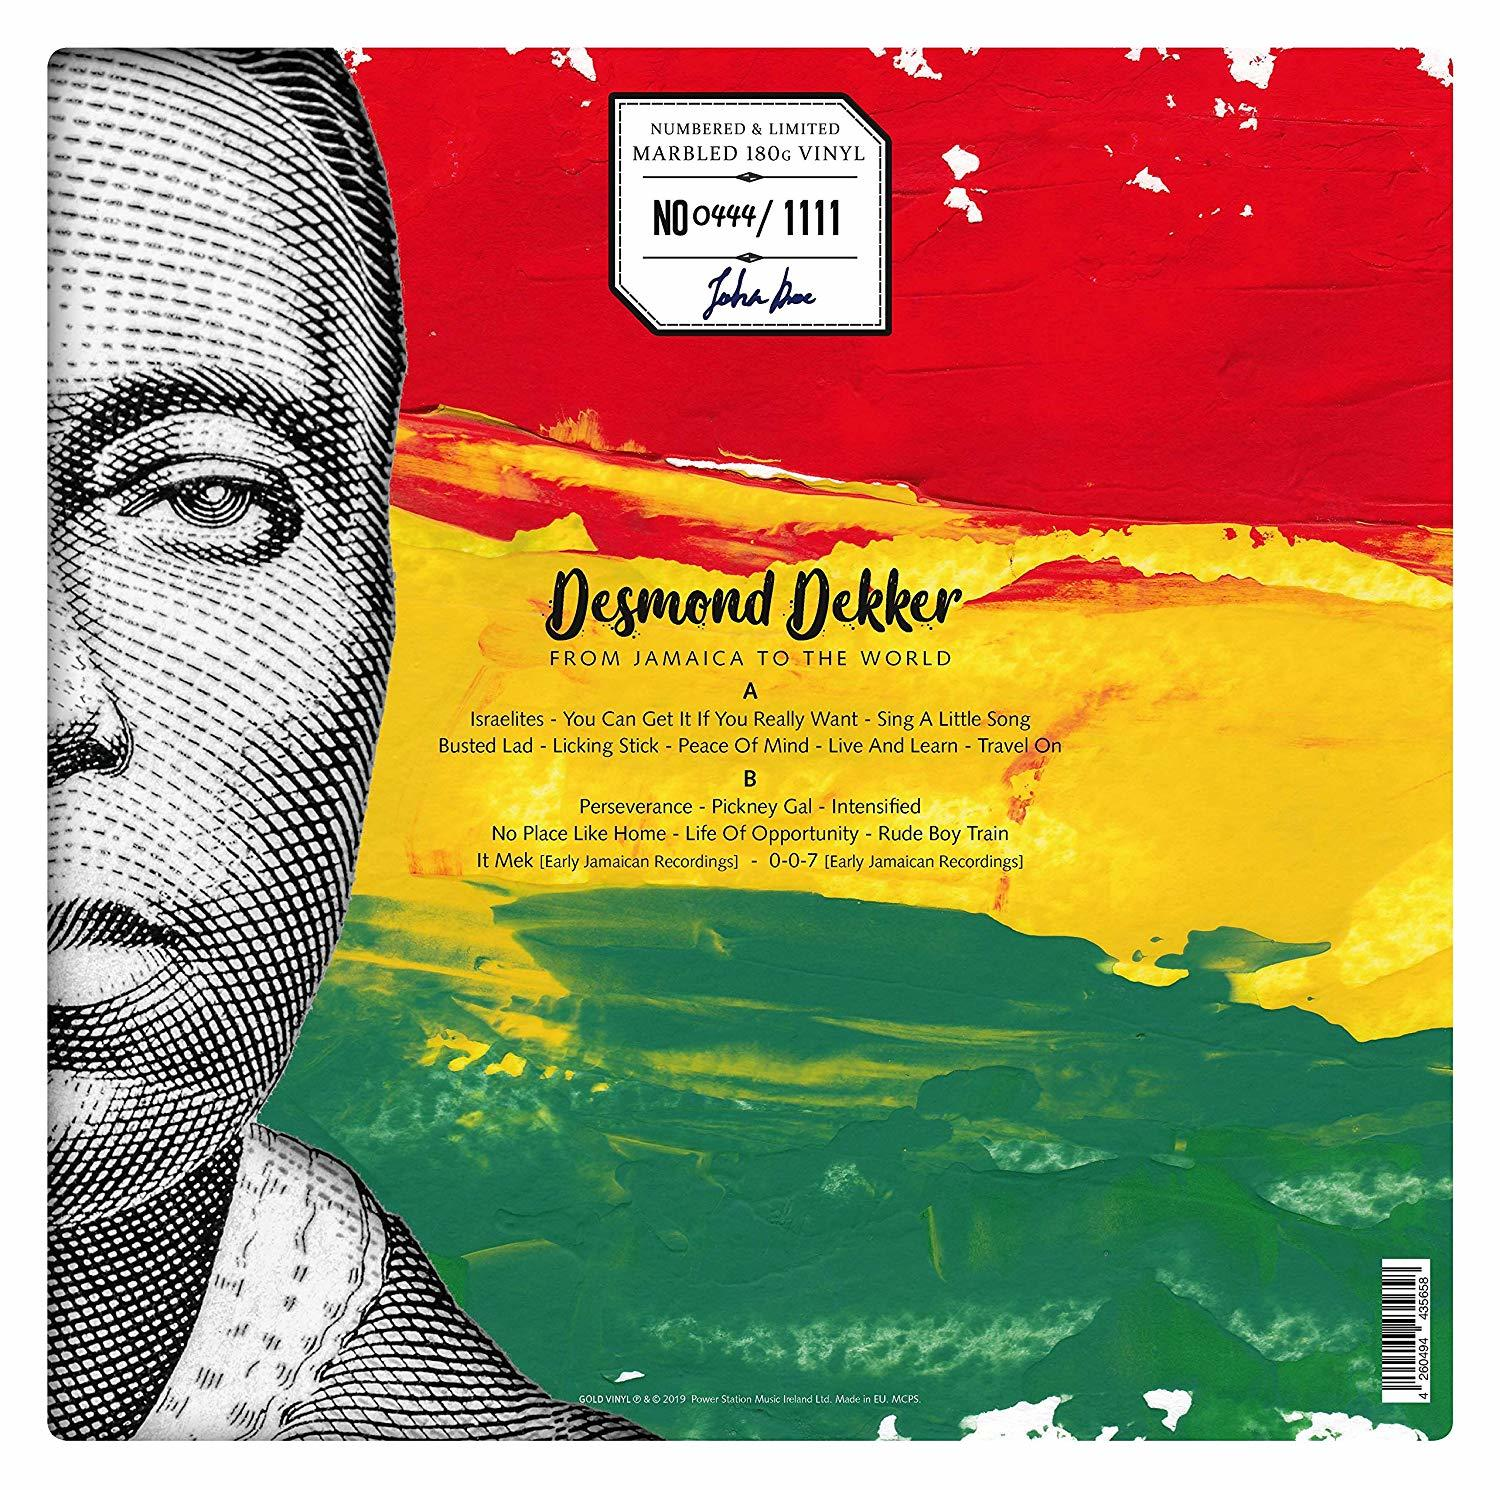 Desmond Dekker Jamaica LP The - World To From - (Vinyl)